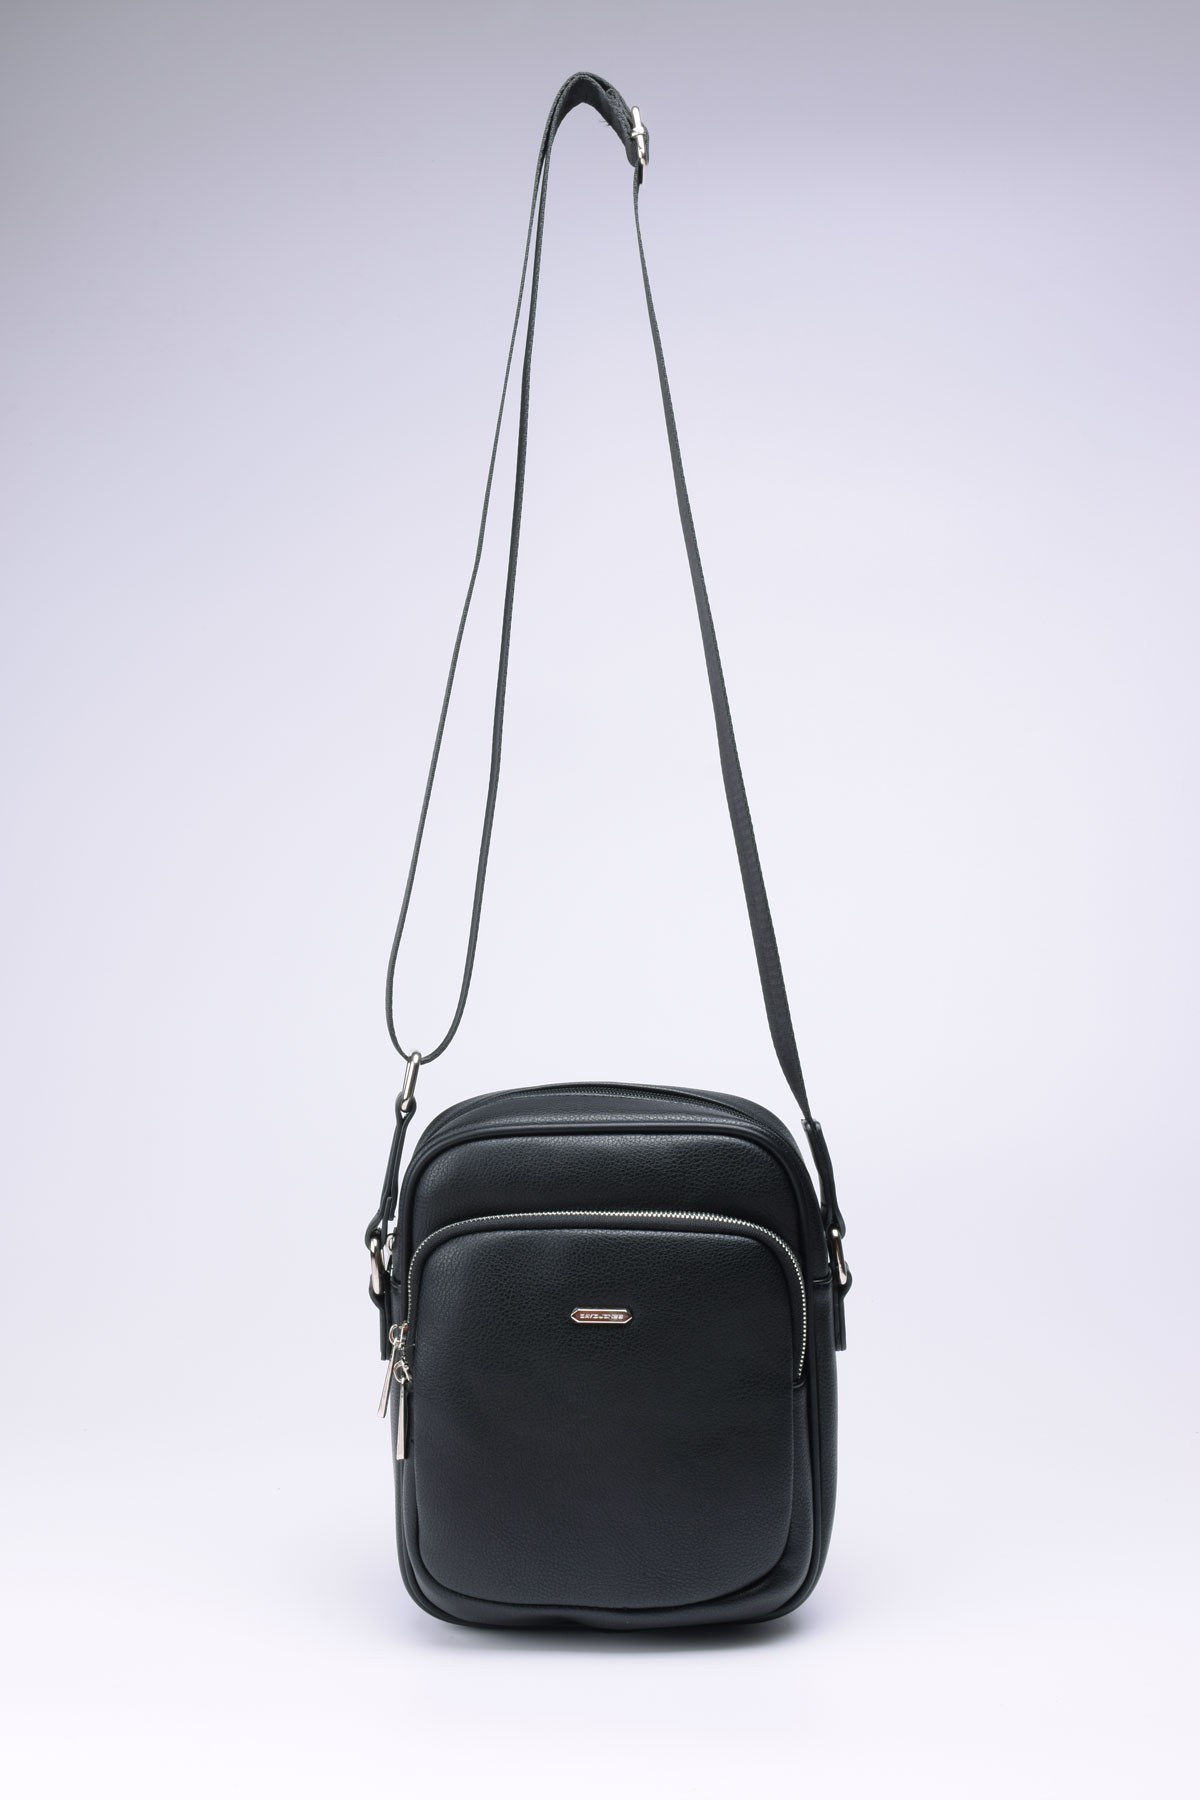 David jones Paris backpack women bag school beg sekolah perempuan beg galas  belakang bag pack | Shopee Malaysia